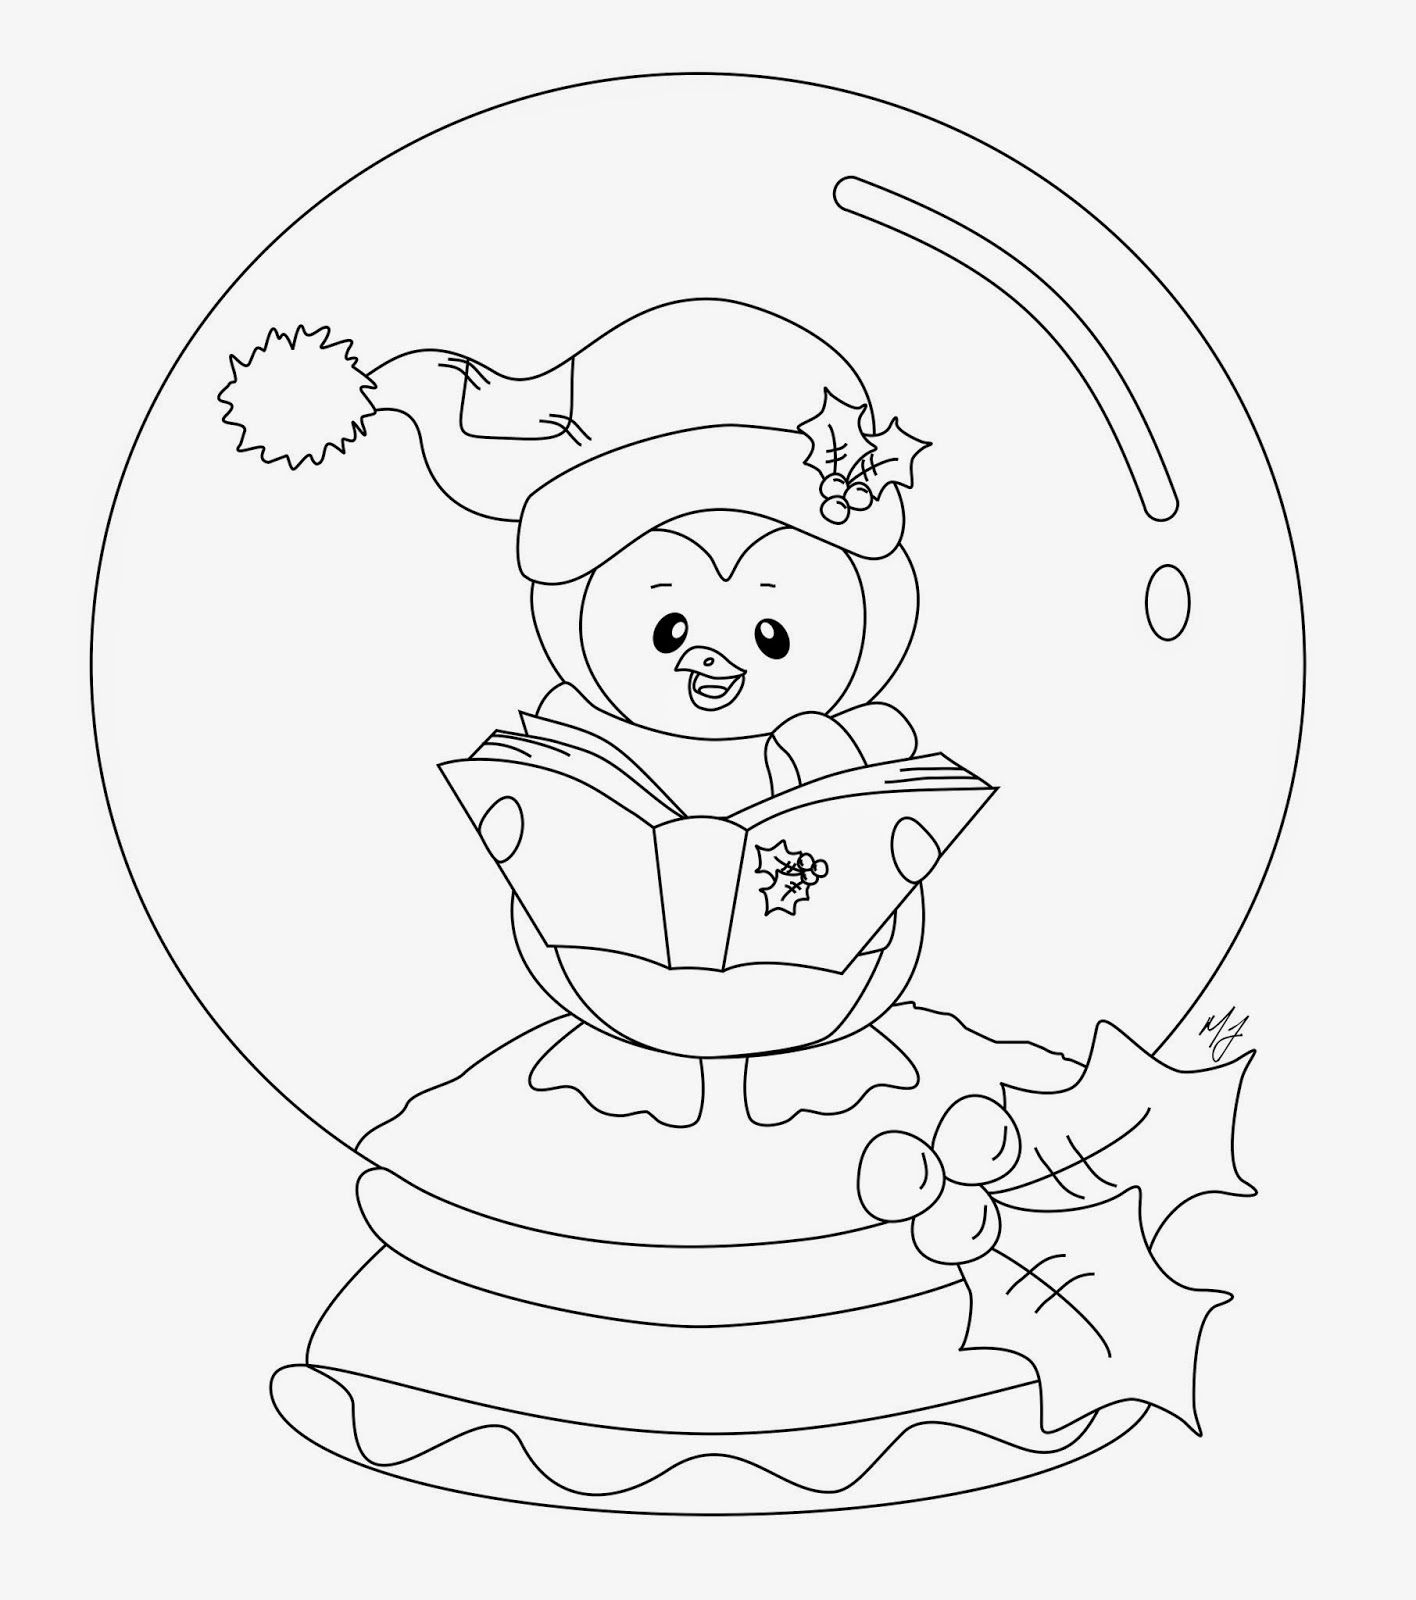 snowglobe+penguin+2+bw.jpg (JPEG Image, 1416 × 1600 pixels) - Scaled (36%)  | Penguin coloring pages, Coloring pages, Christmas coloring pages